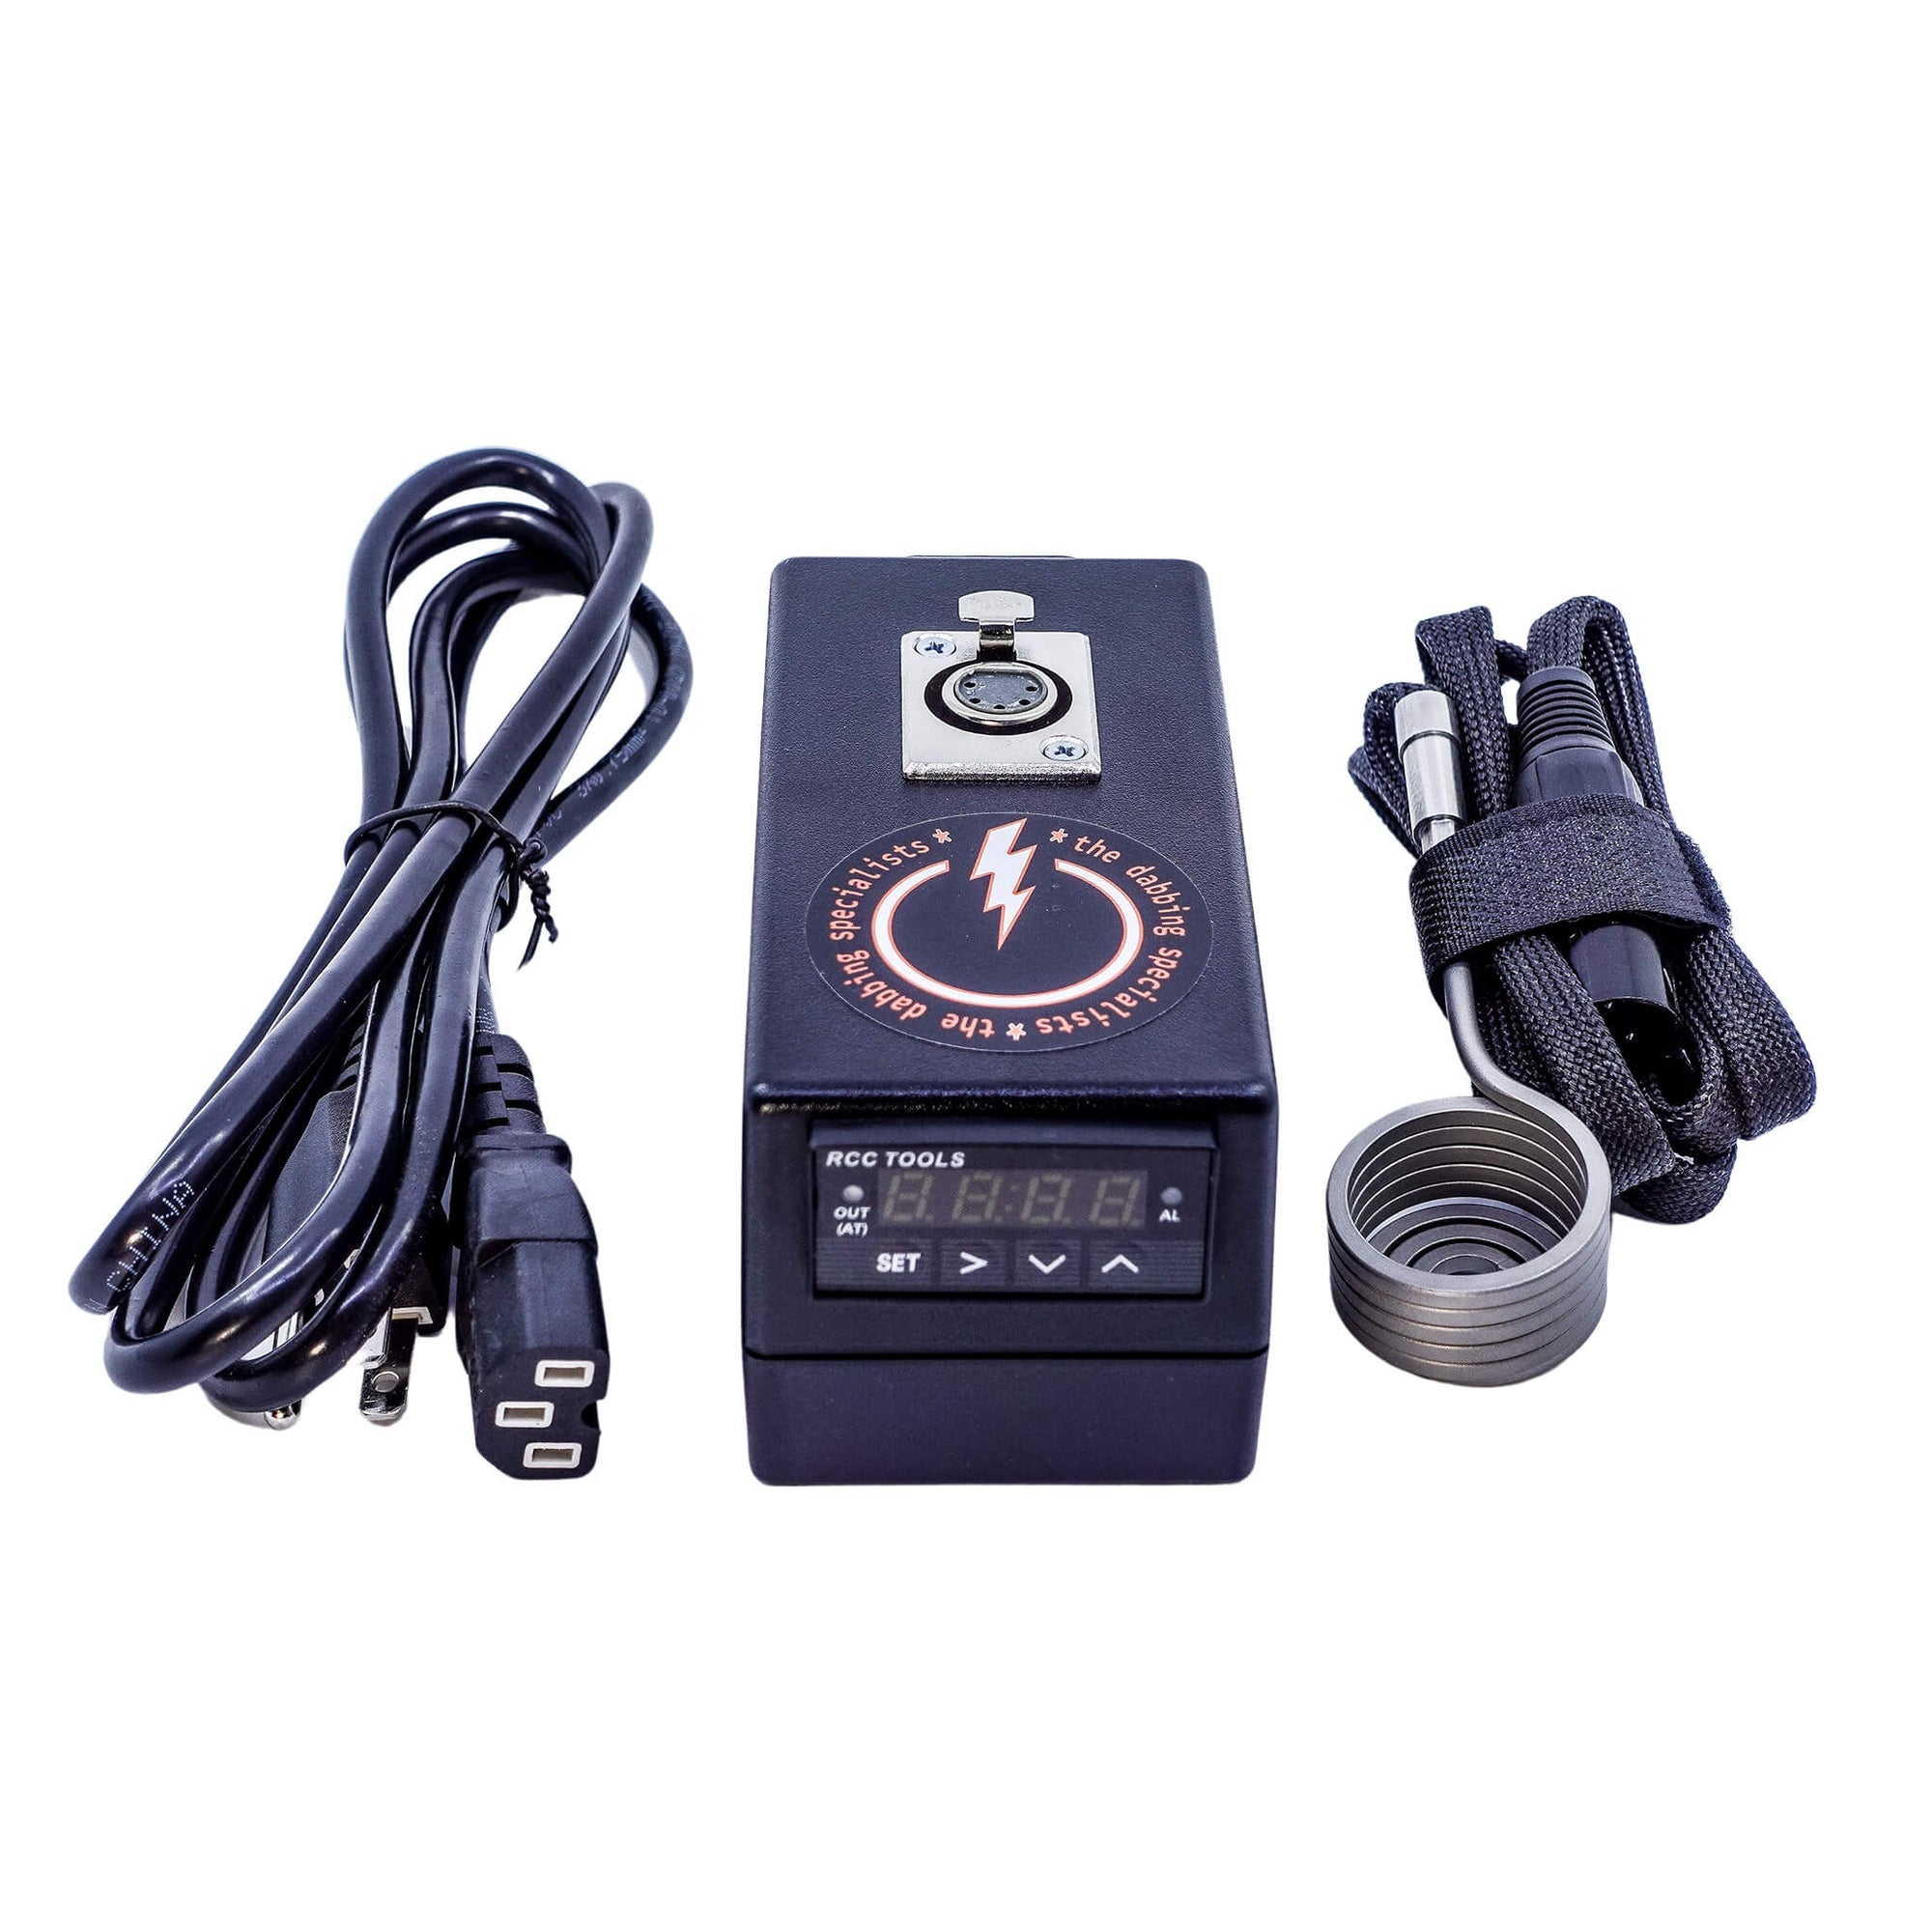 Portable BlackBar eNail | Complete eNail Kit View 30mm Coil Heater | the dabbing specialists